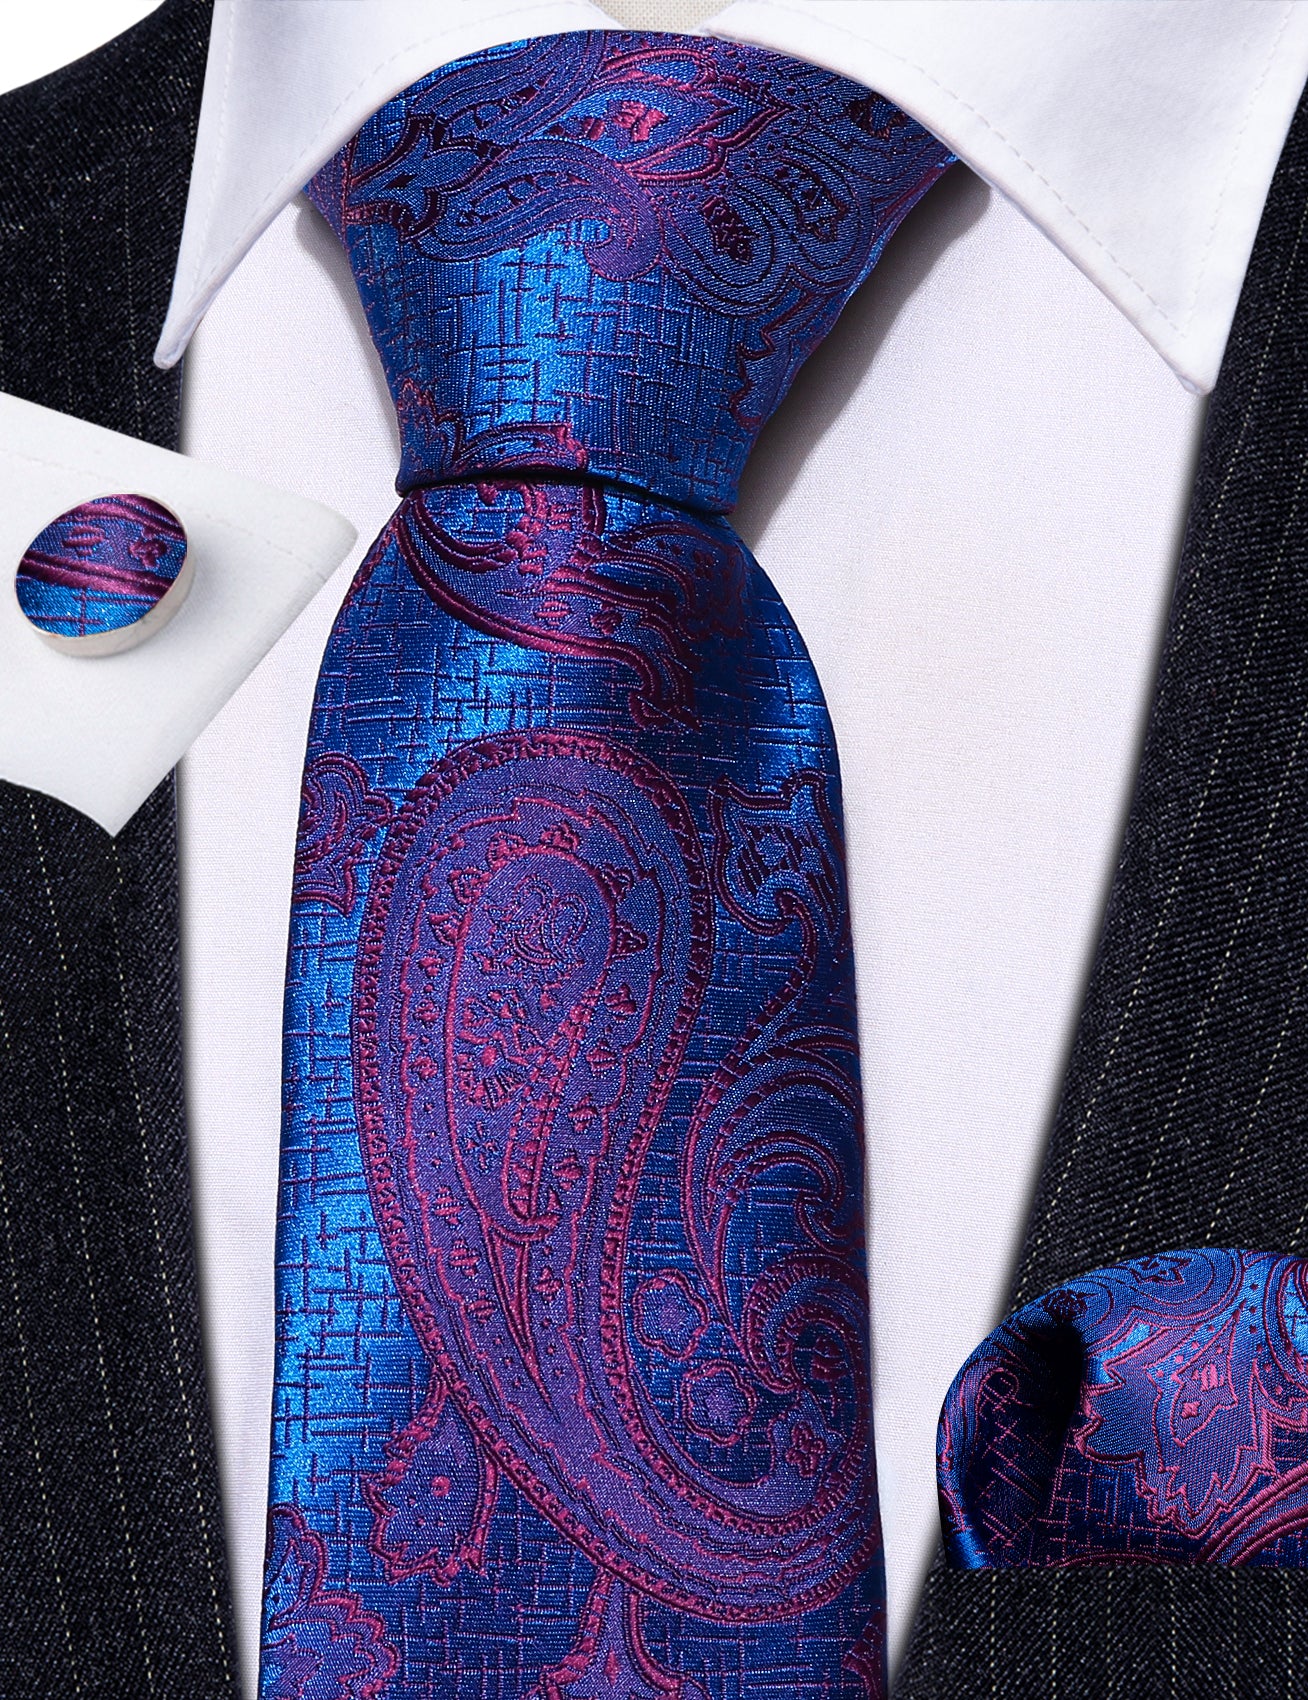 Blue Purple Paisley Silk Tie Hanky Cufflinks Set